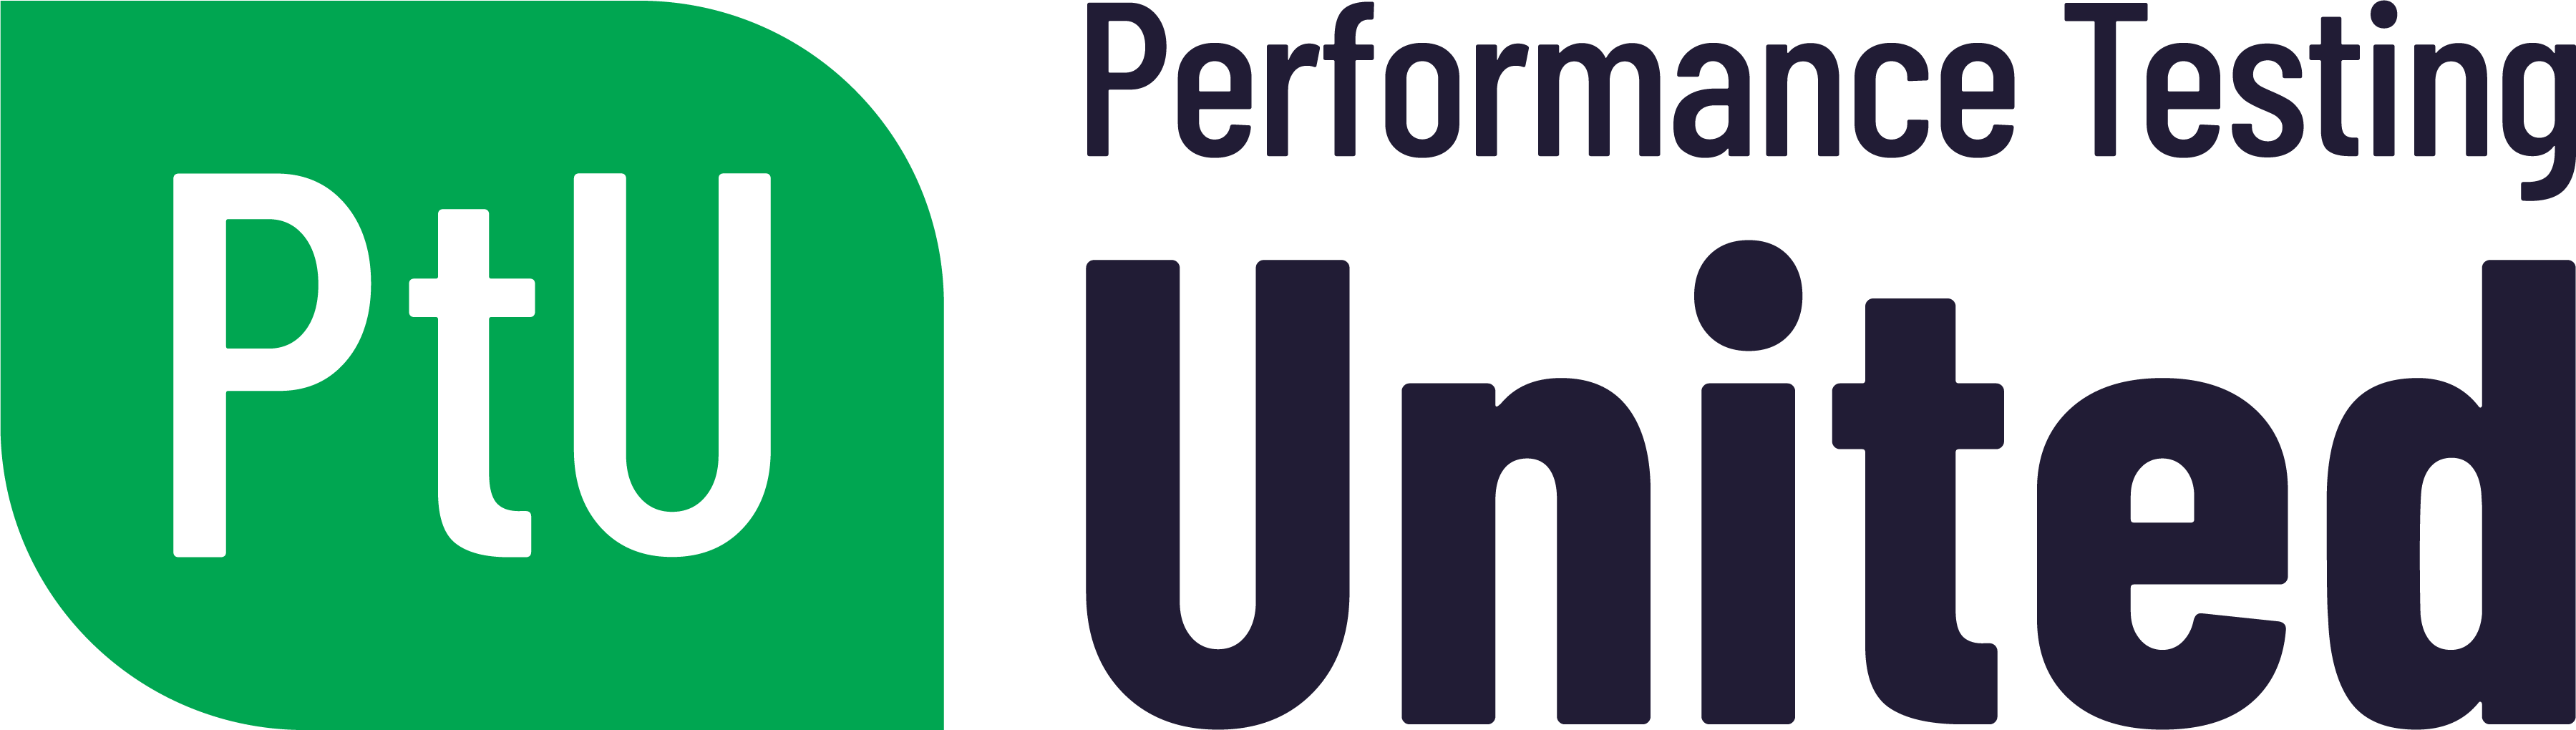 Performance Testing United (PtU) 